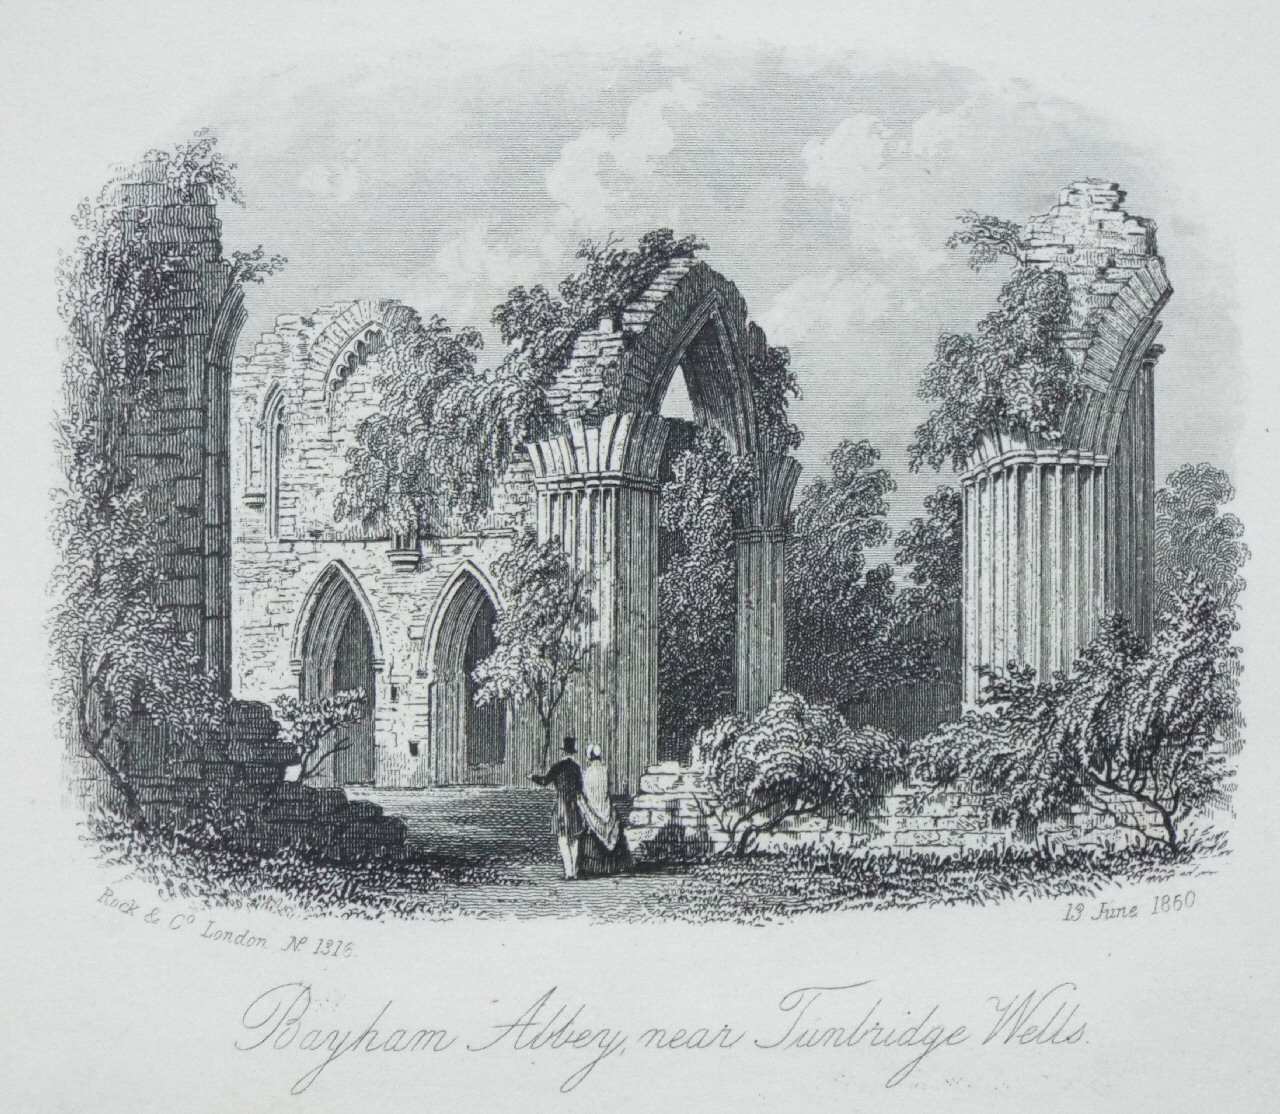 Steel Vignette - Bayham Abbey, near Tunbridge Wells. - Rock